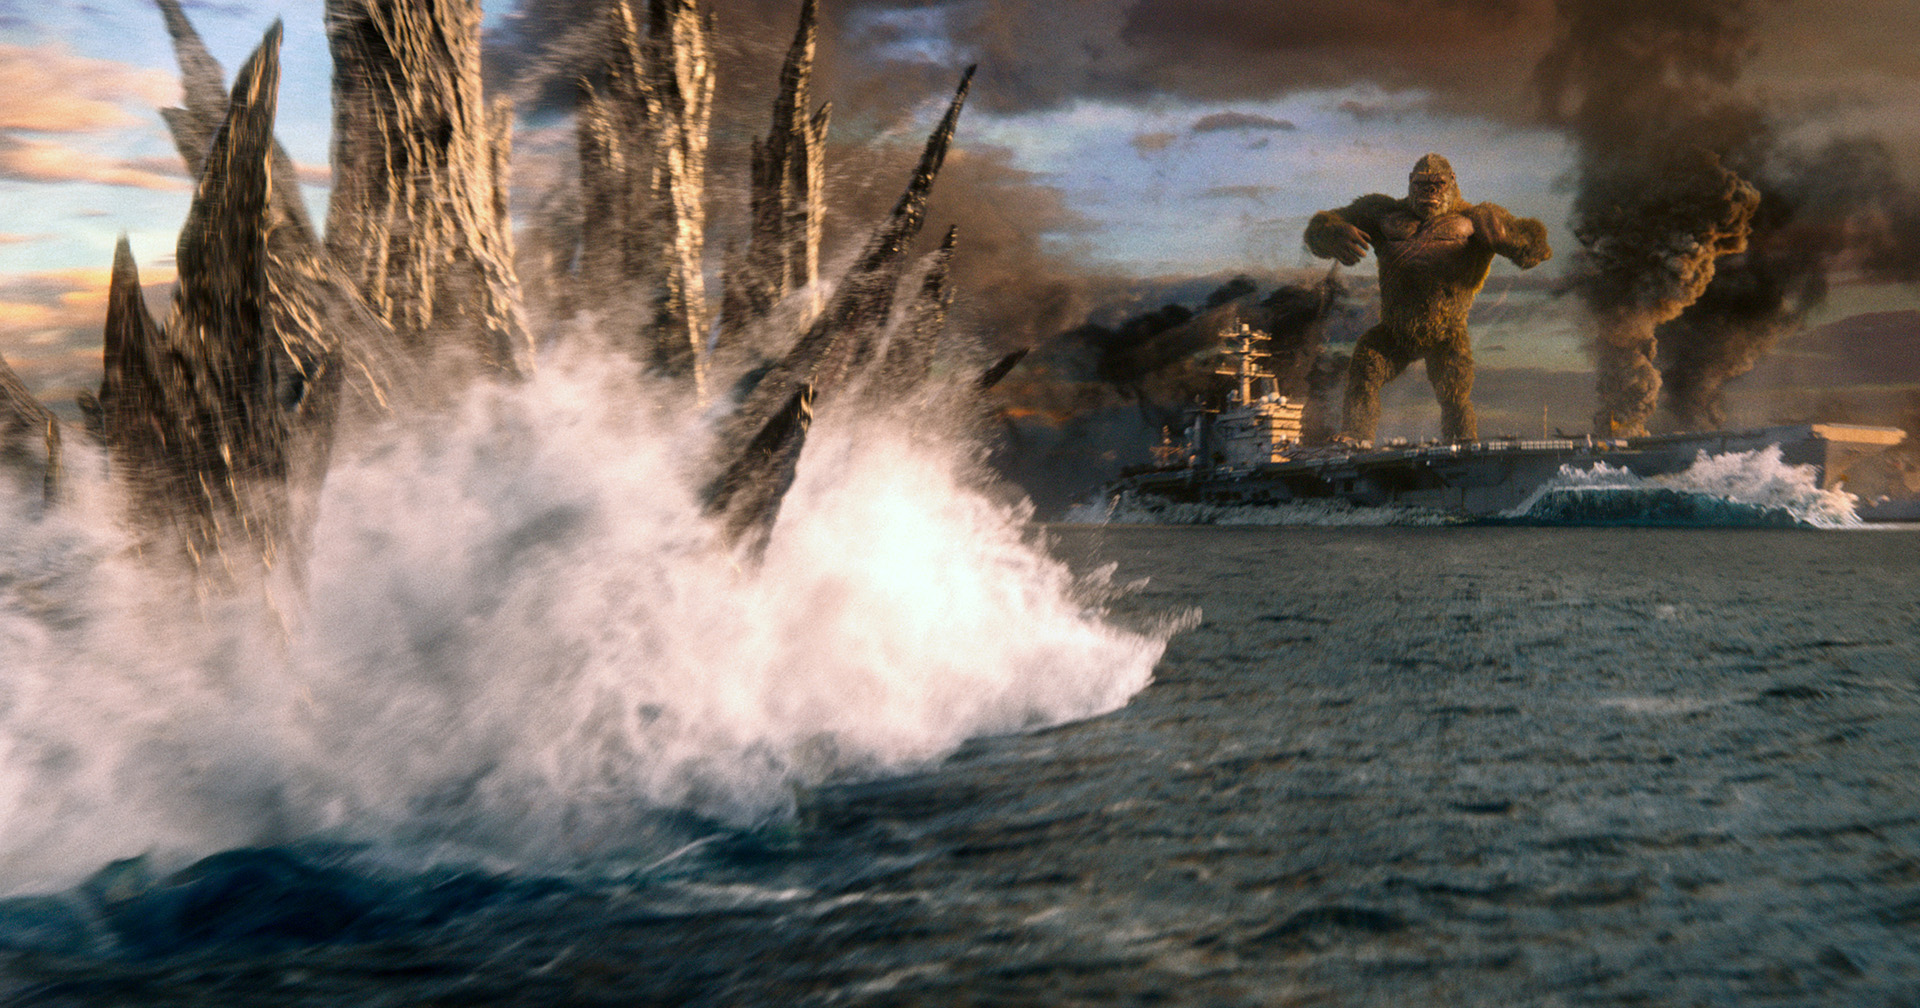 Godzilla vs Kong ทำรายได้แซงหน้า Tenet : ขึ้นแท่นหนังทำเงินสูงสุดของสหรัฐฯ ในช่วง COVID-19